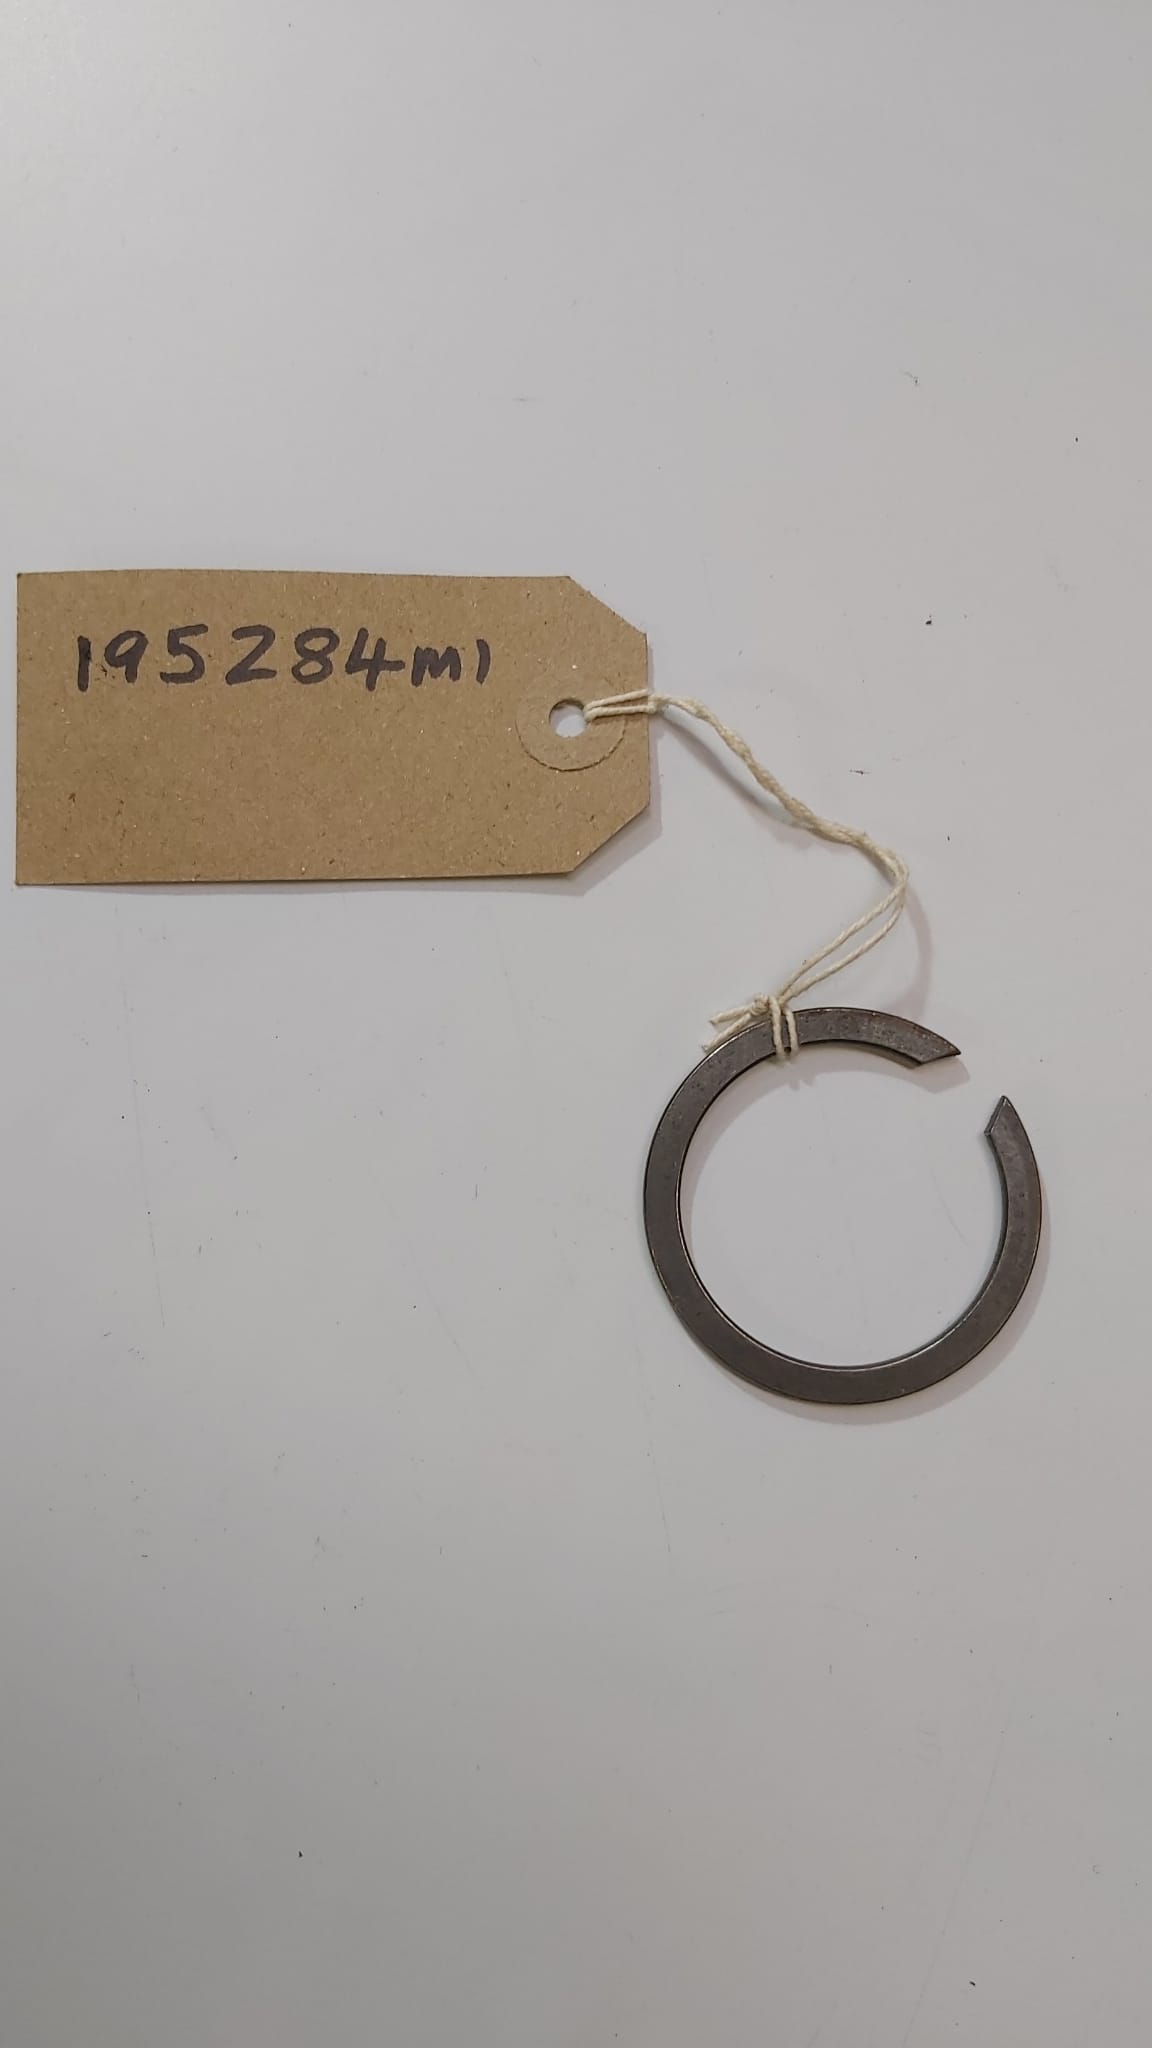 retaining-ring-195284m1